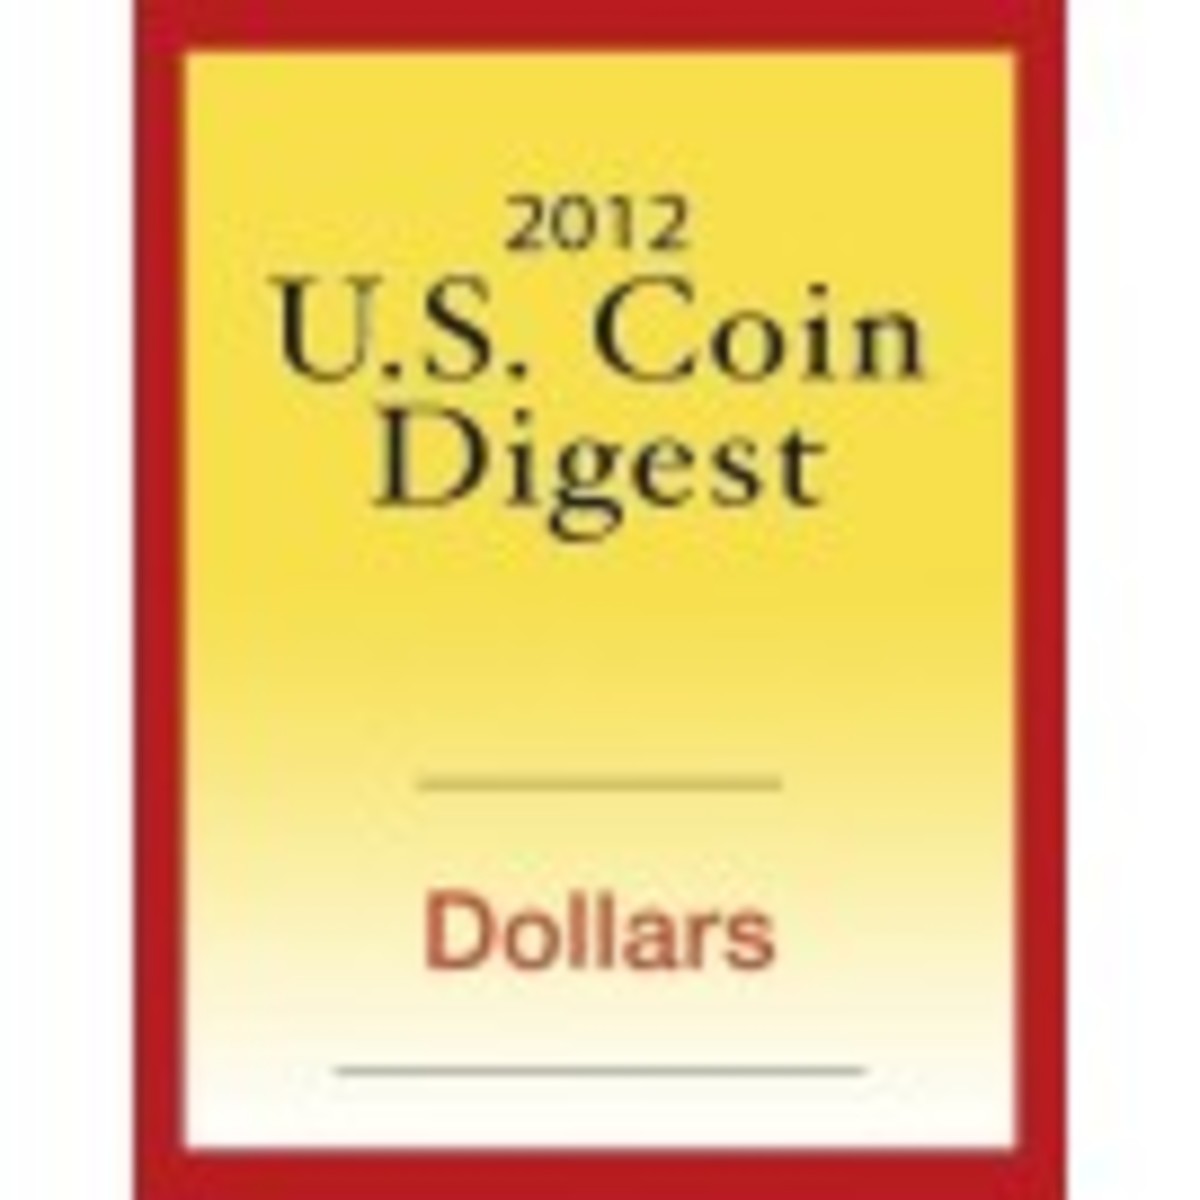 2012 U.S. Coin Digest: Dollars